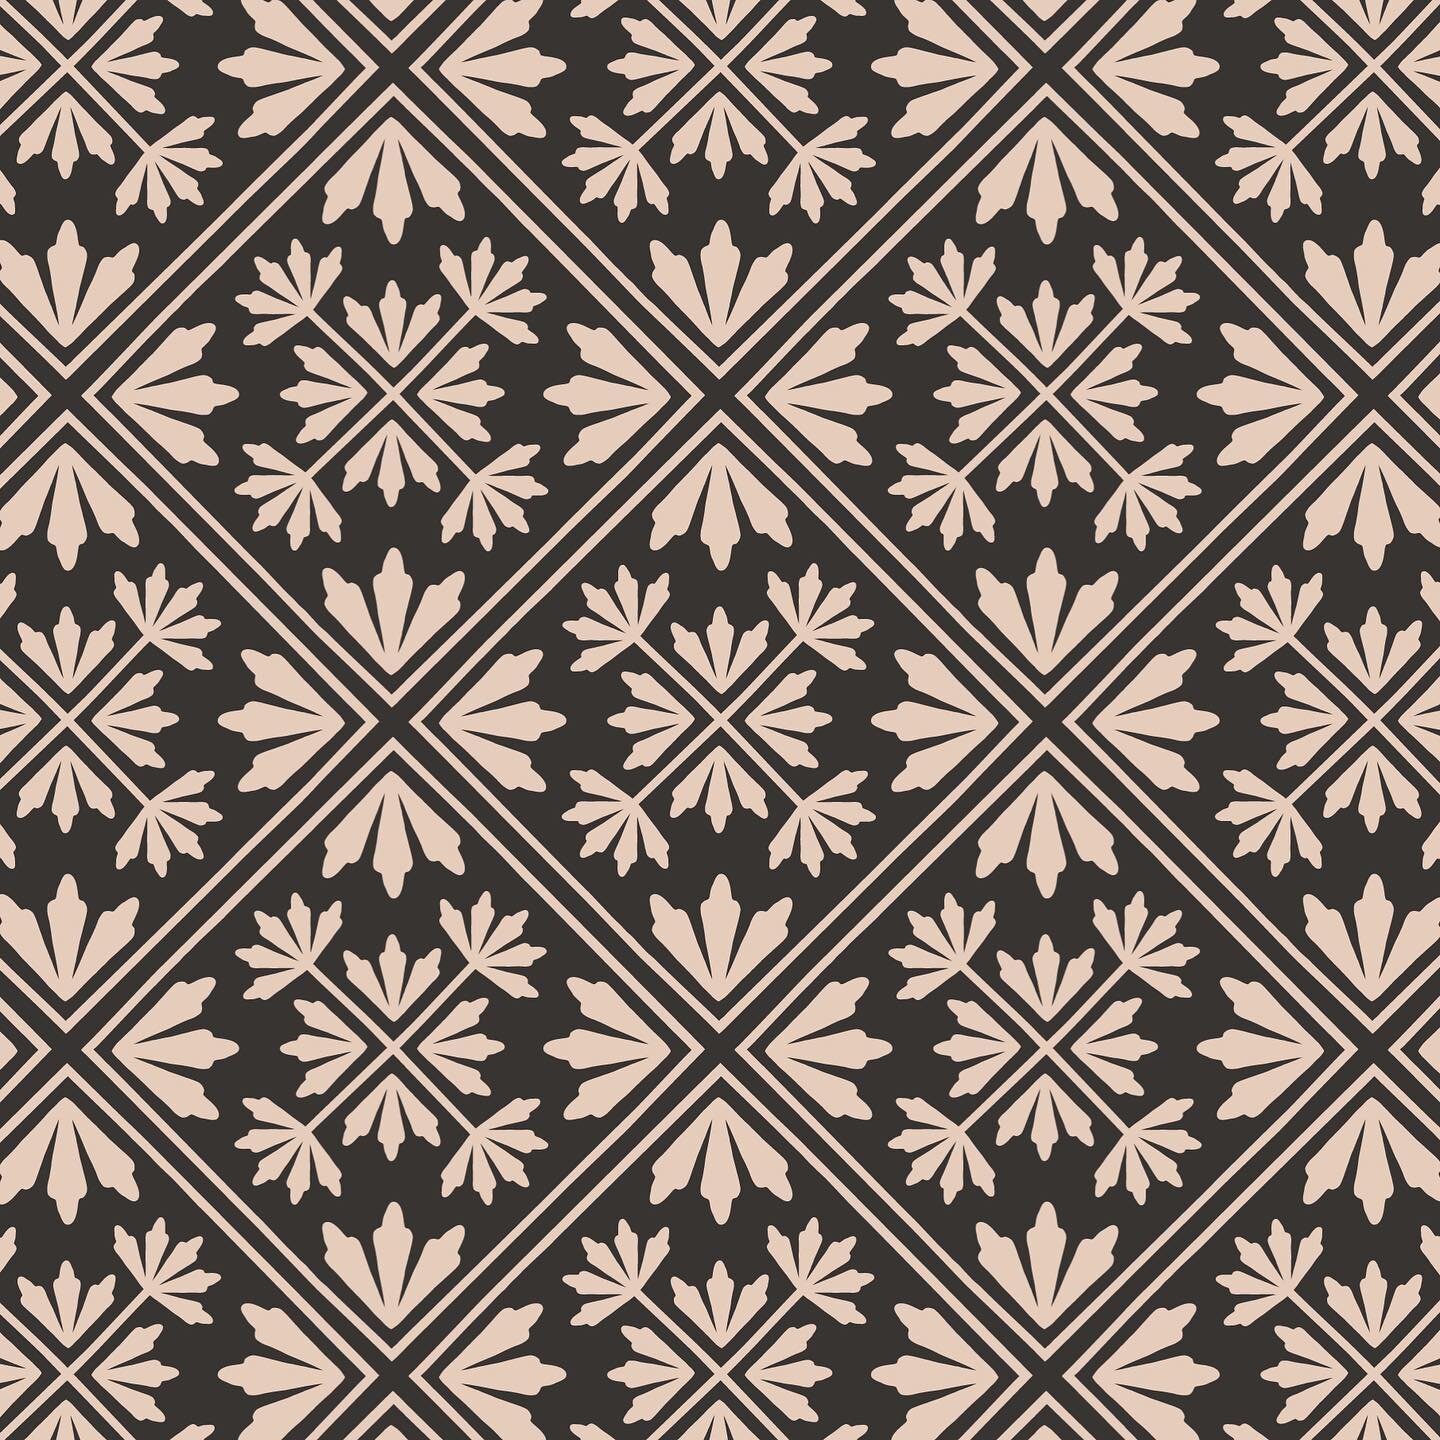 . 
.
.
#art
#print 
#pattern 
#surfacepattern 
#patterndesign 
#patterndesigns
#patterncollection 
#surfacepatterndesign 
#surfacepatterndesigner 
#patterninspiration 
#patterndesigner 
#colorandpattern 
#textiledesigner
#mylifeinpattern 
#textilepat